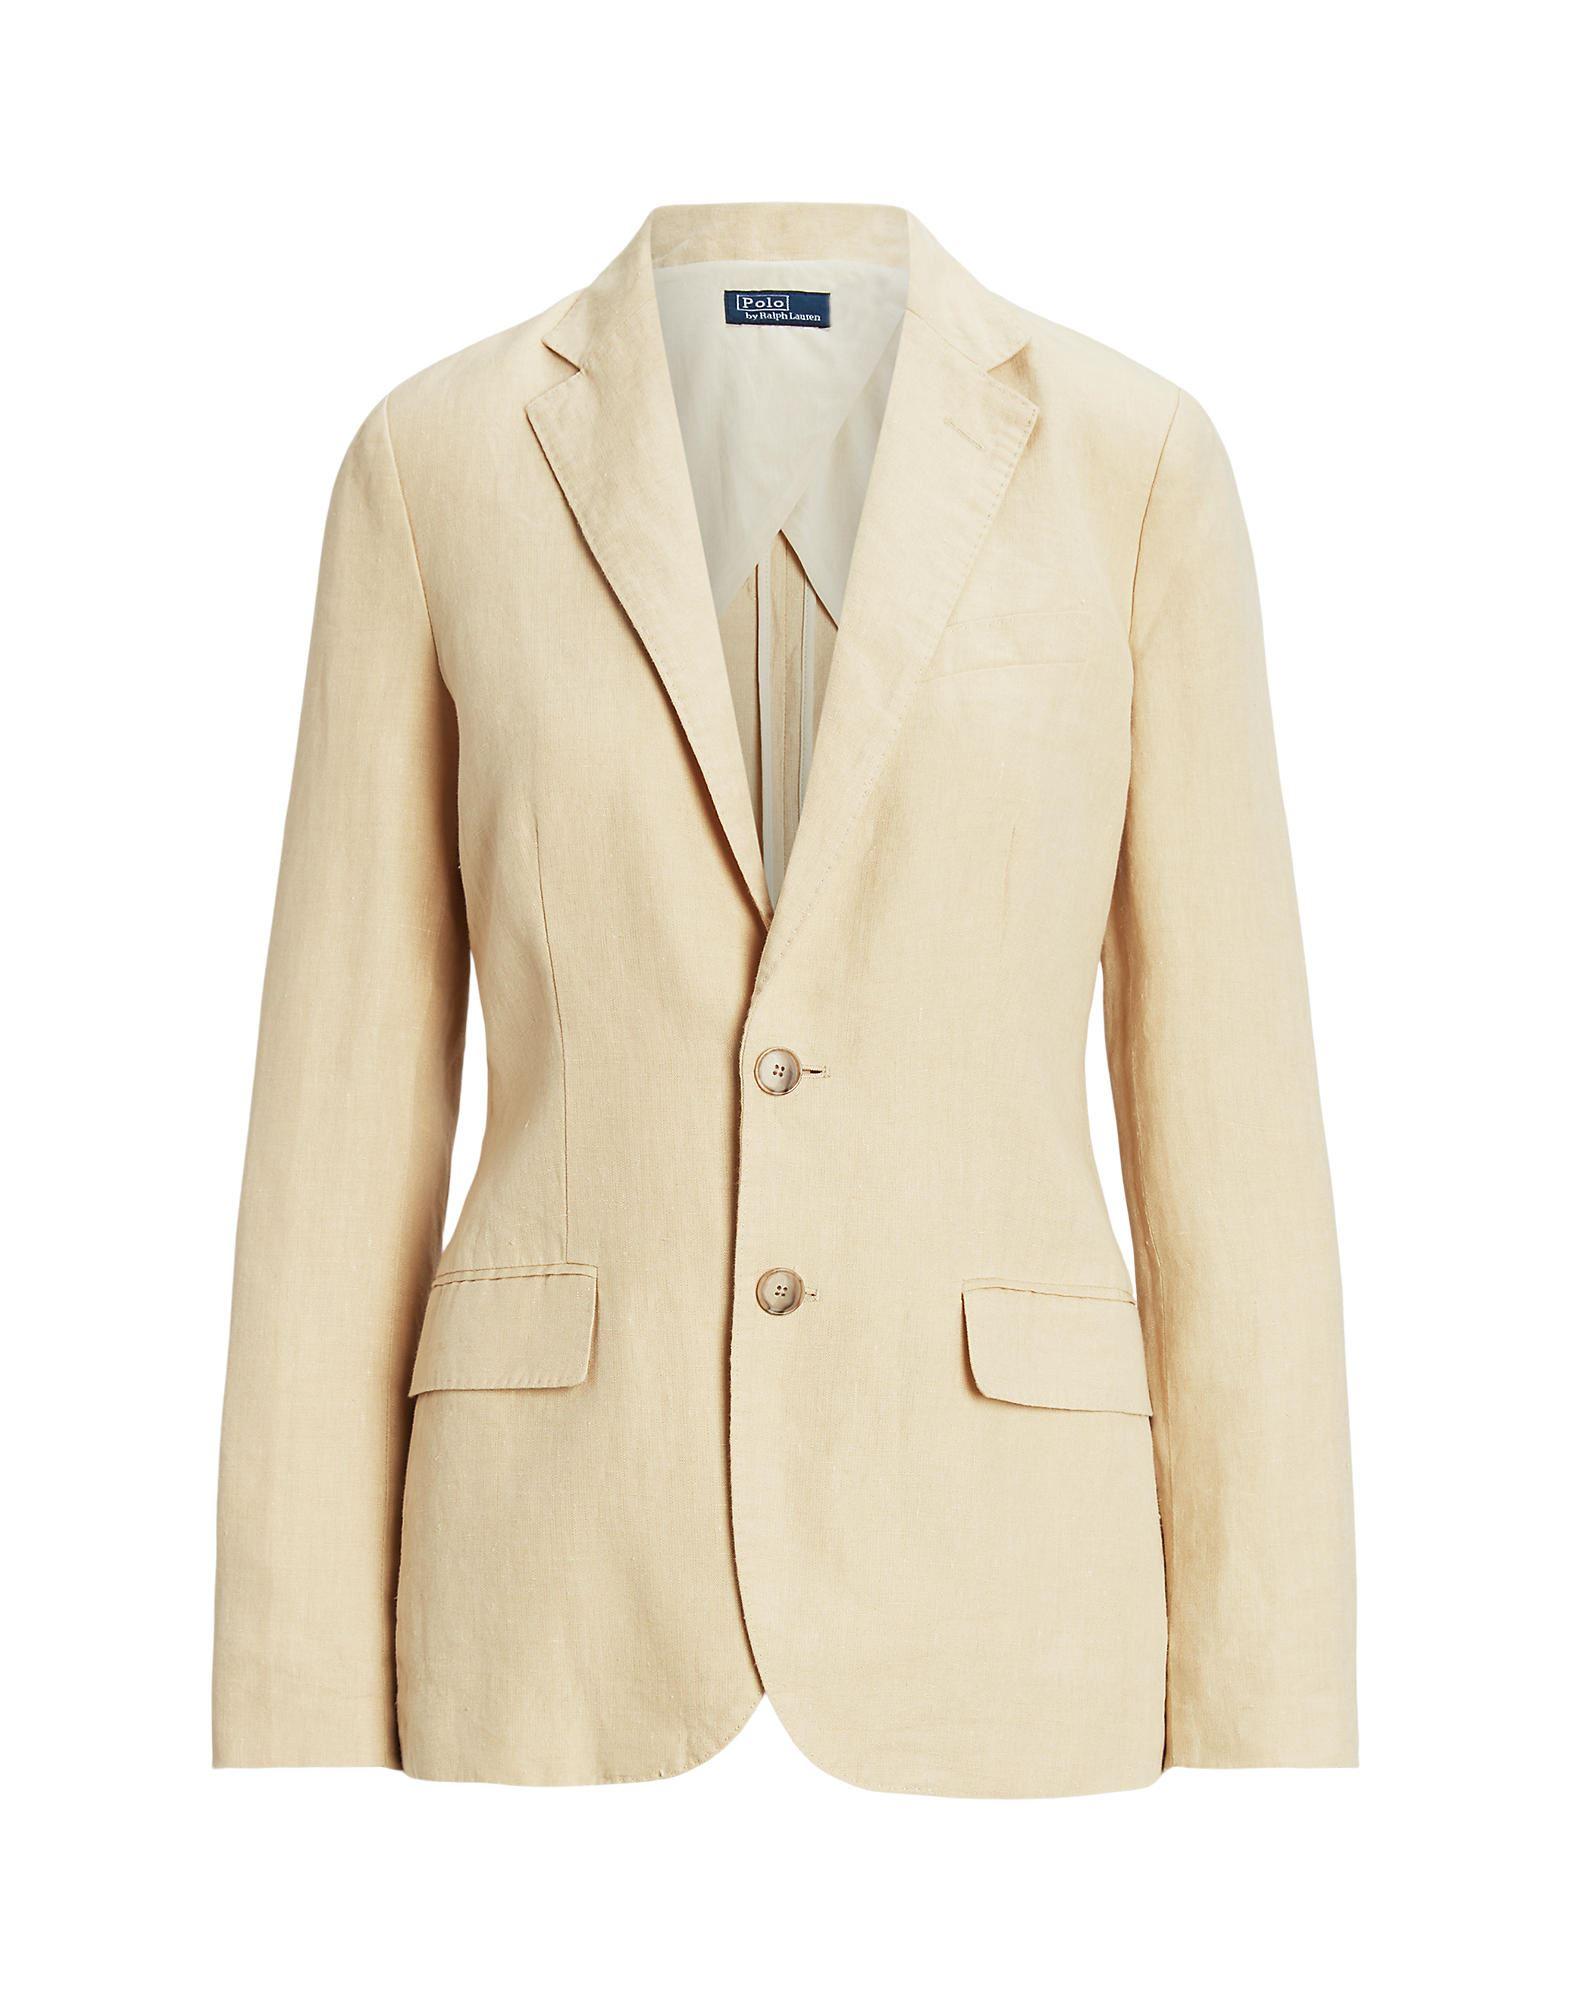 Polo Ralph Lauren Suit Jacket in Natural | Lyst